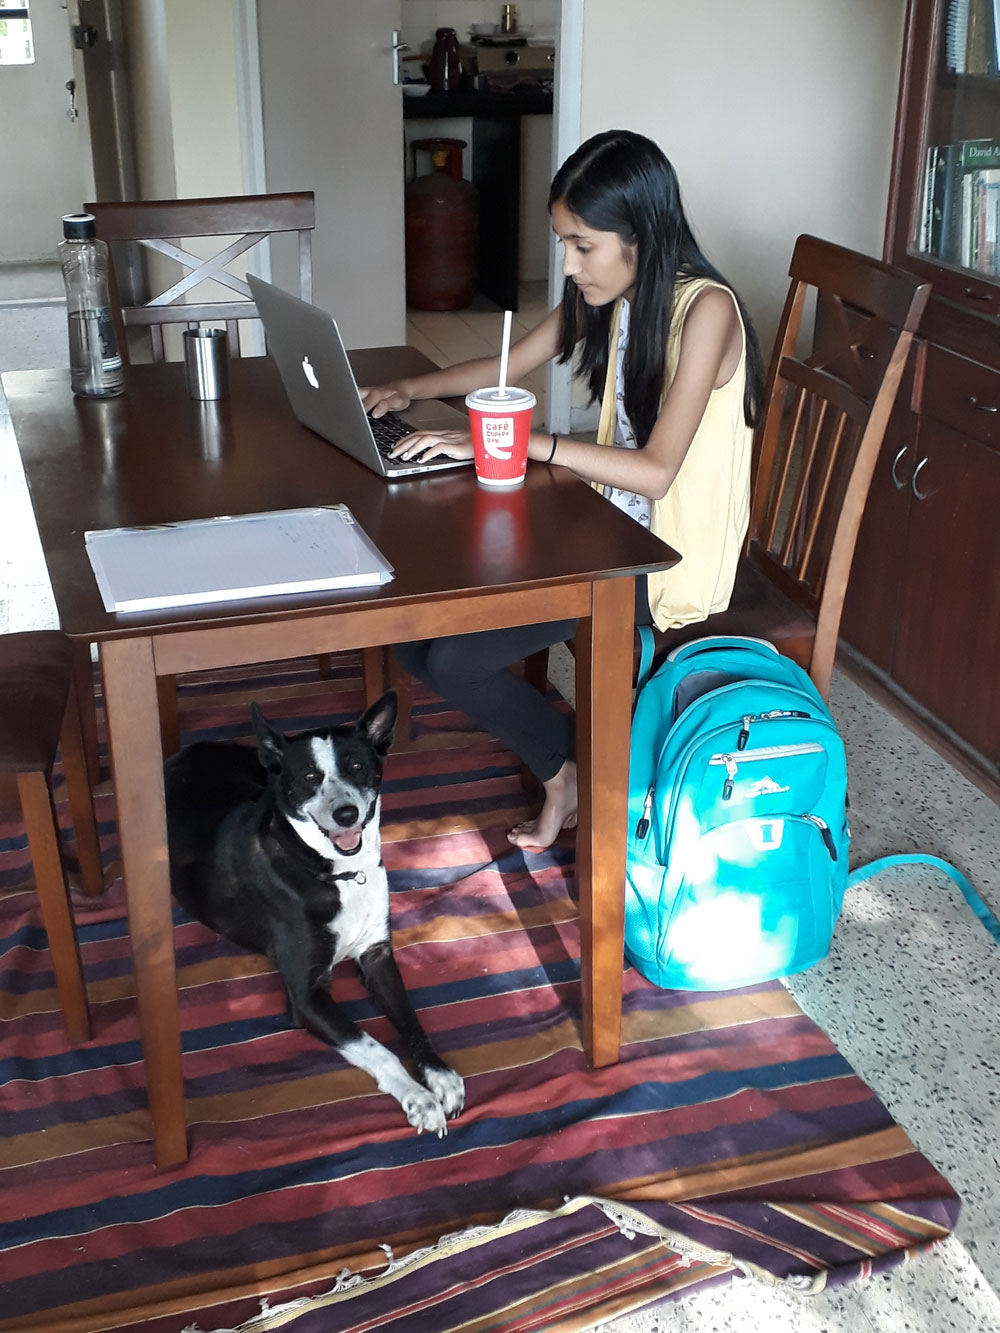 Nishita Bakshi writing Tara's autobiography whilst Tara (The Mentorship Studio's mascot) keeps her company